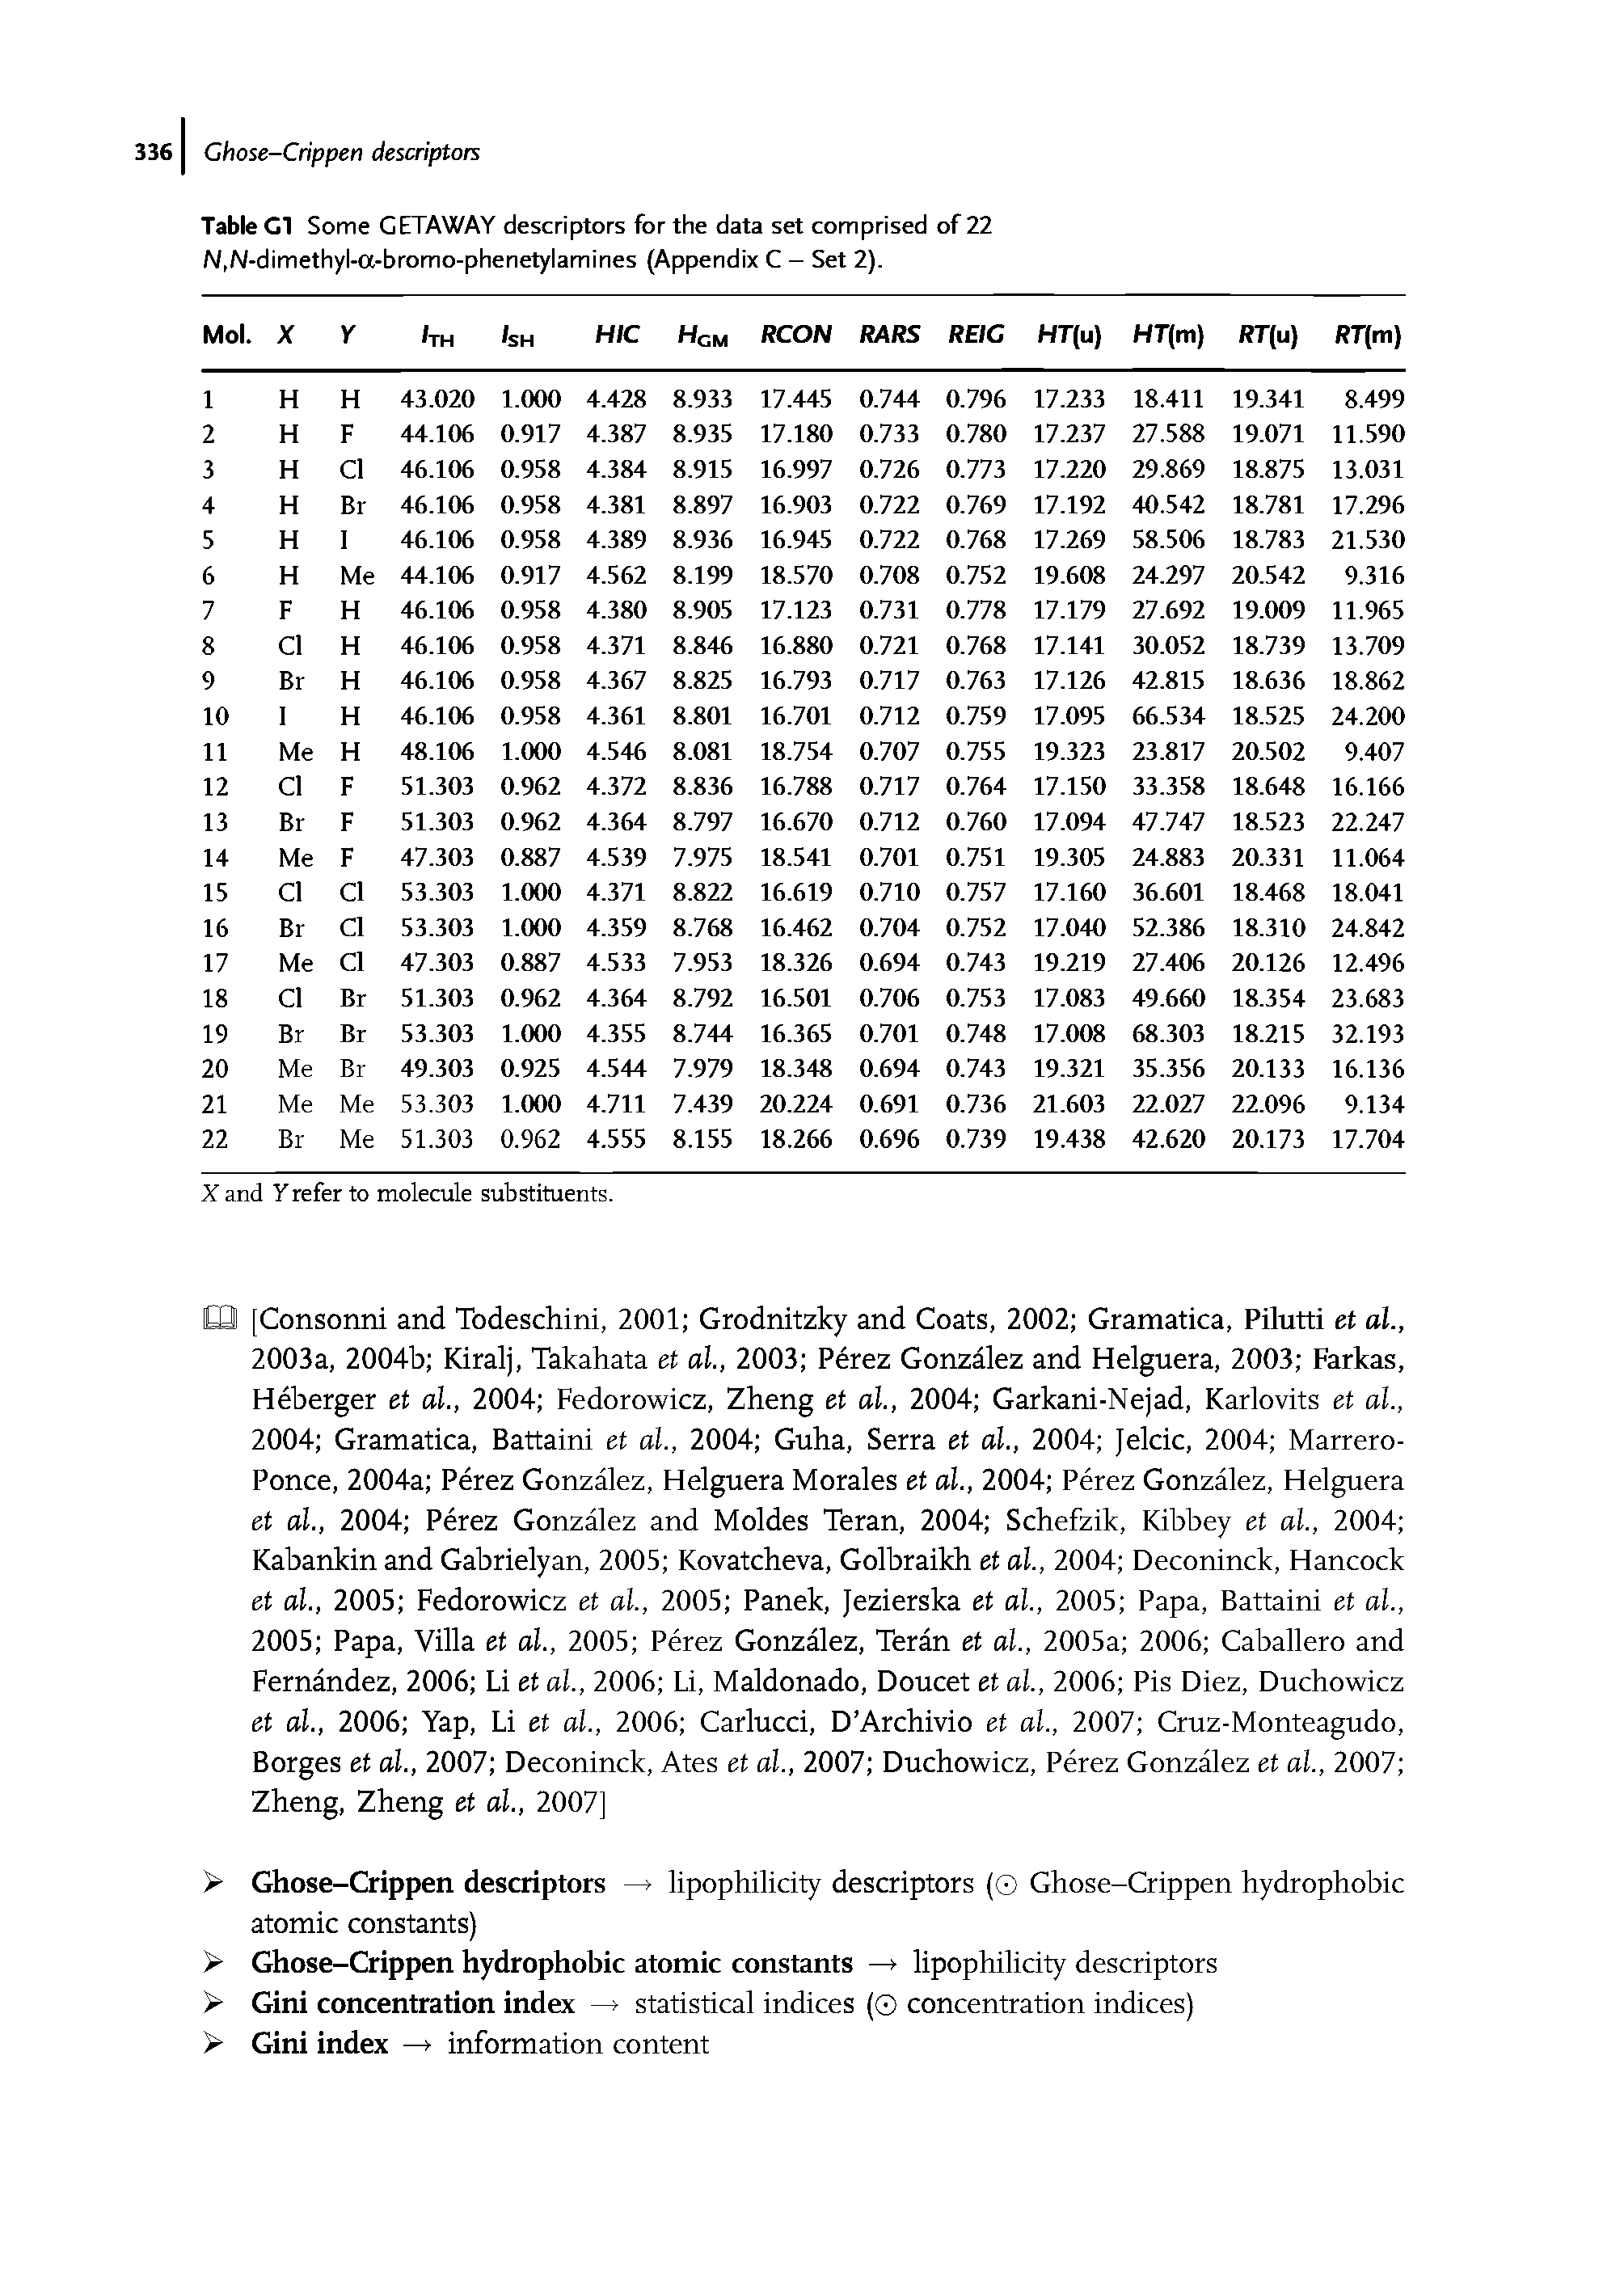 Table Cl Some GETAWAY descriptors for the data set comprised of 22 N,N-dimethyl-a-bromo-phenetylamines (Appendix C — Set 2).